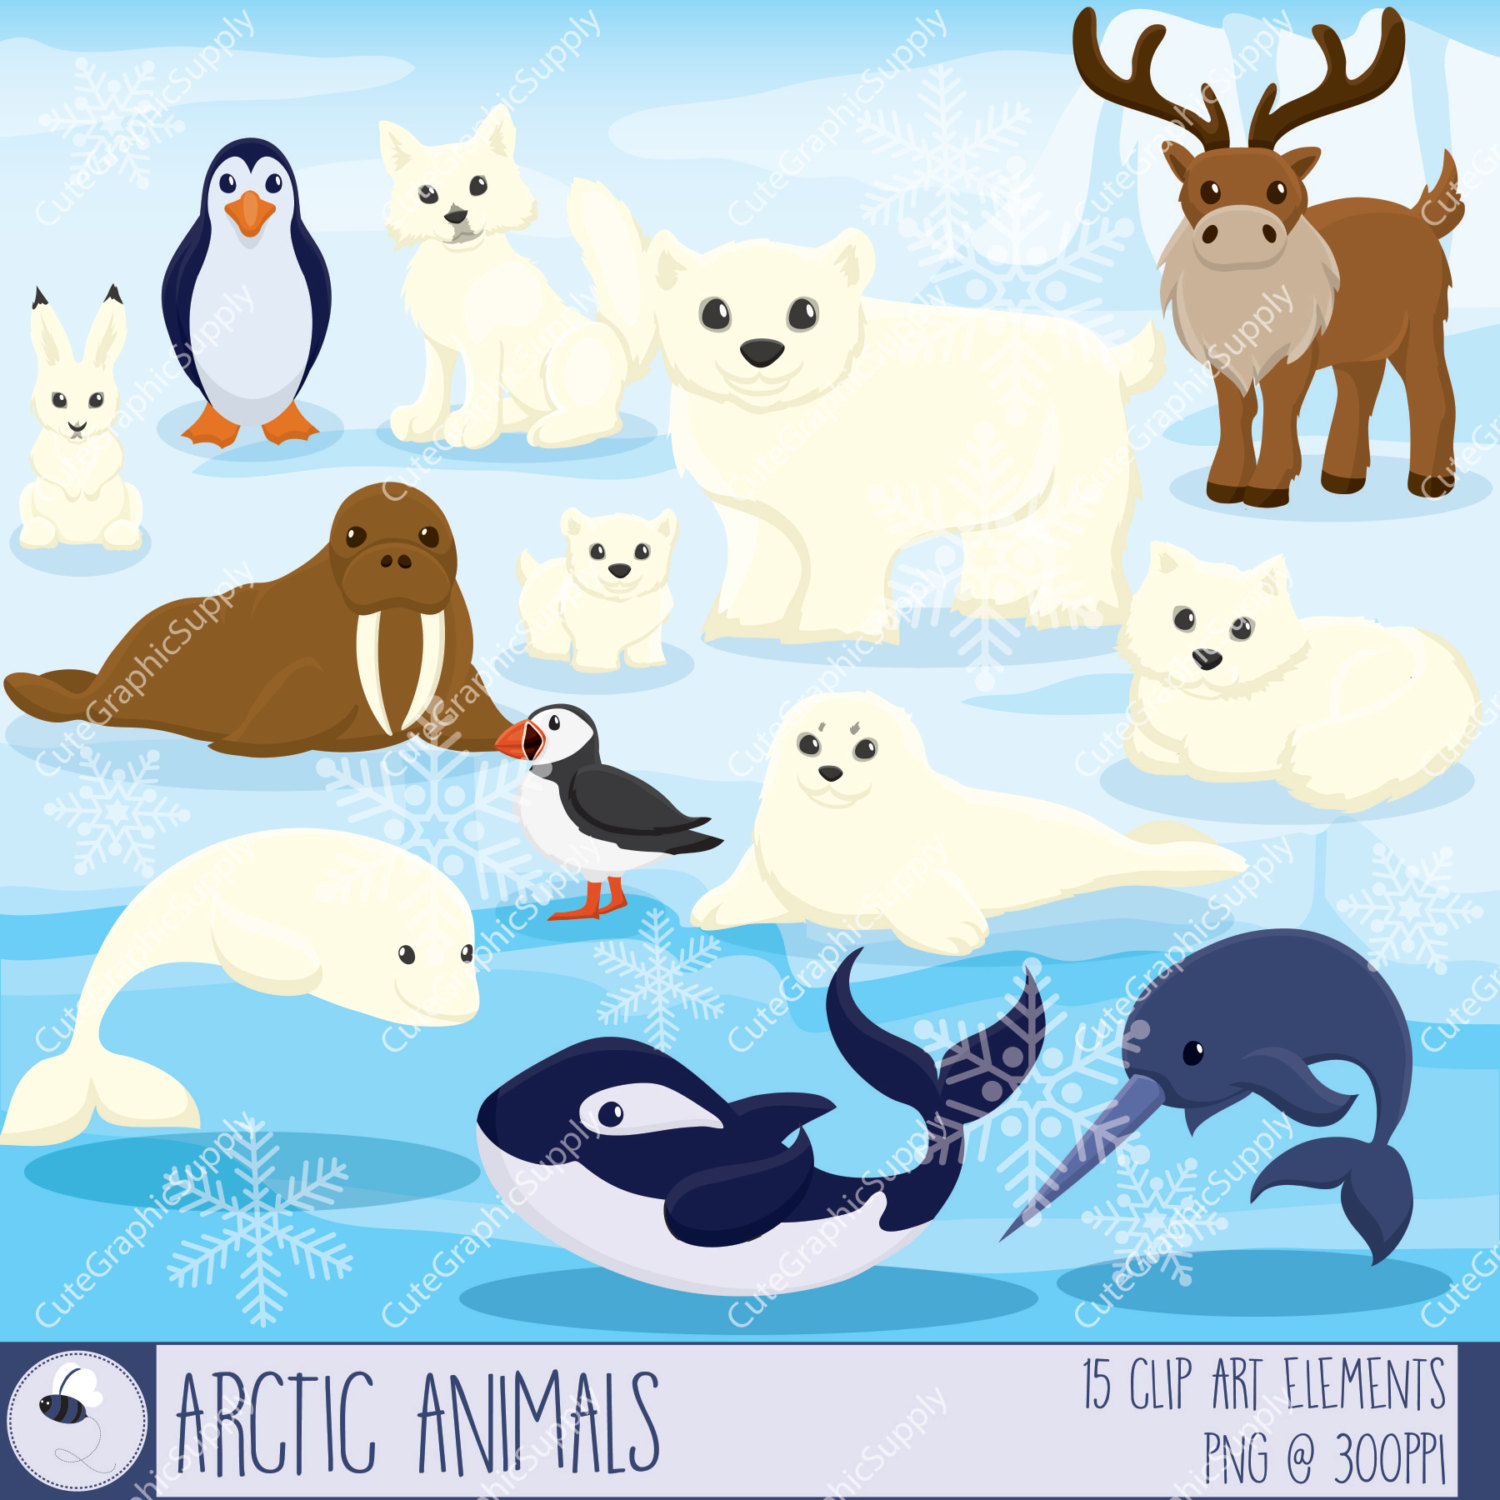 Arctic animals clipart winter clipart animal clipart arctic.